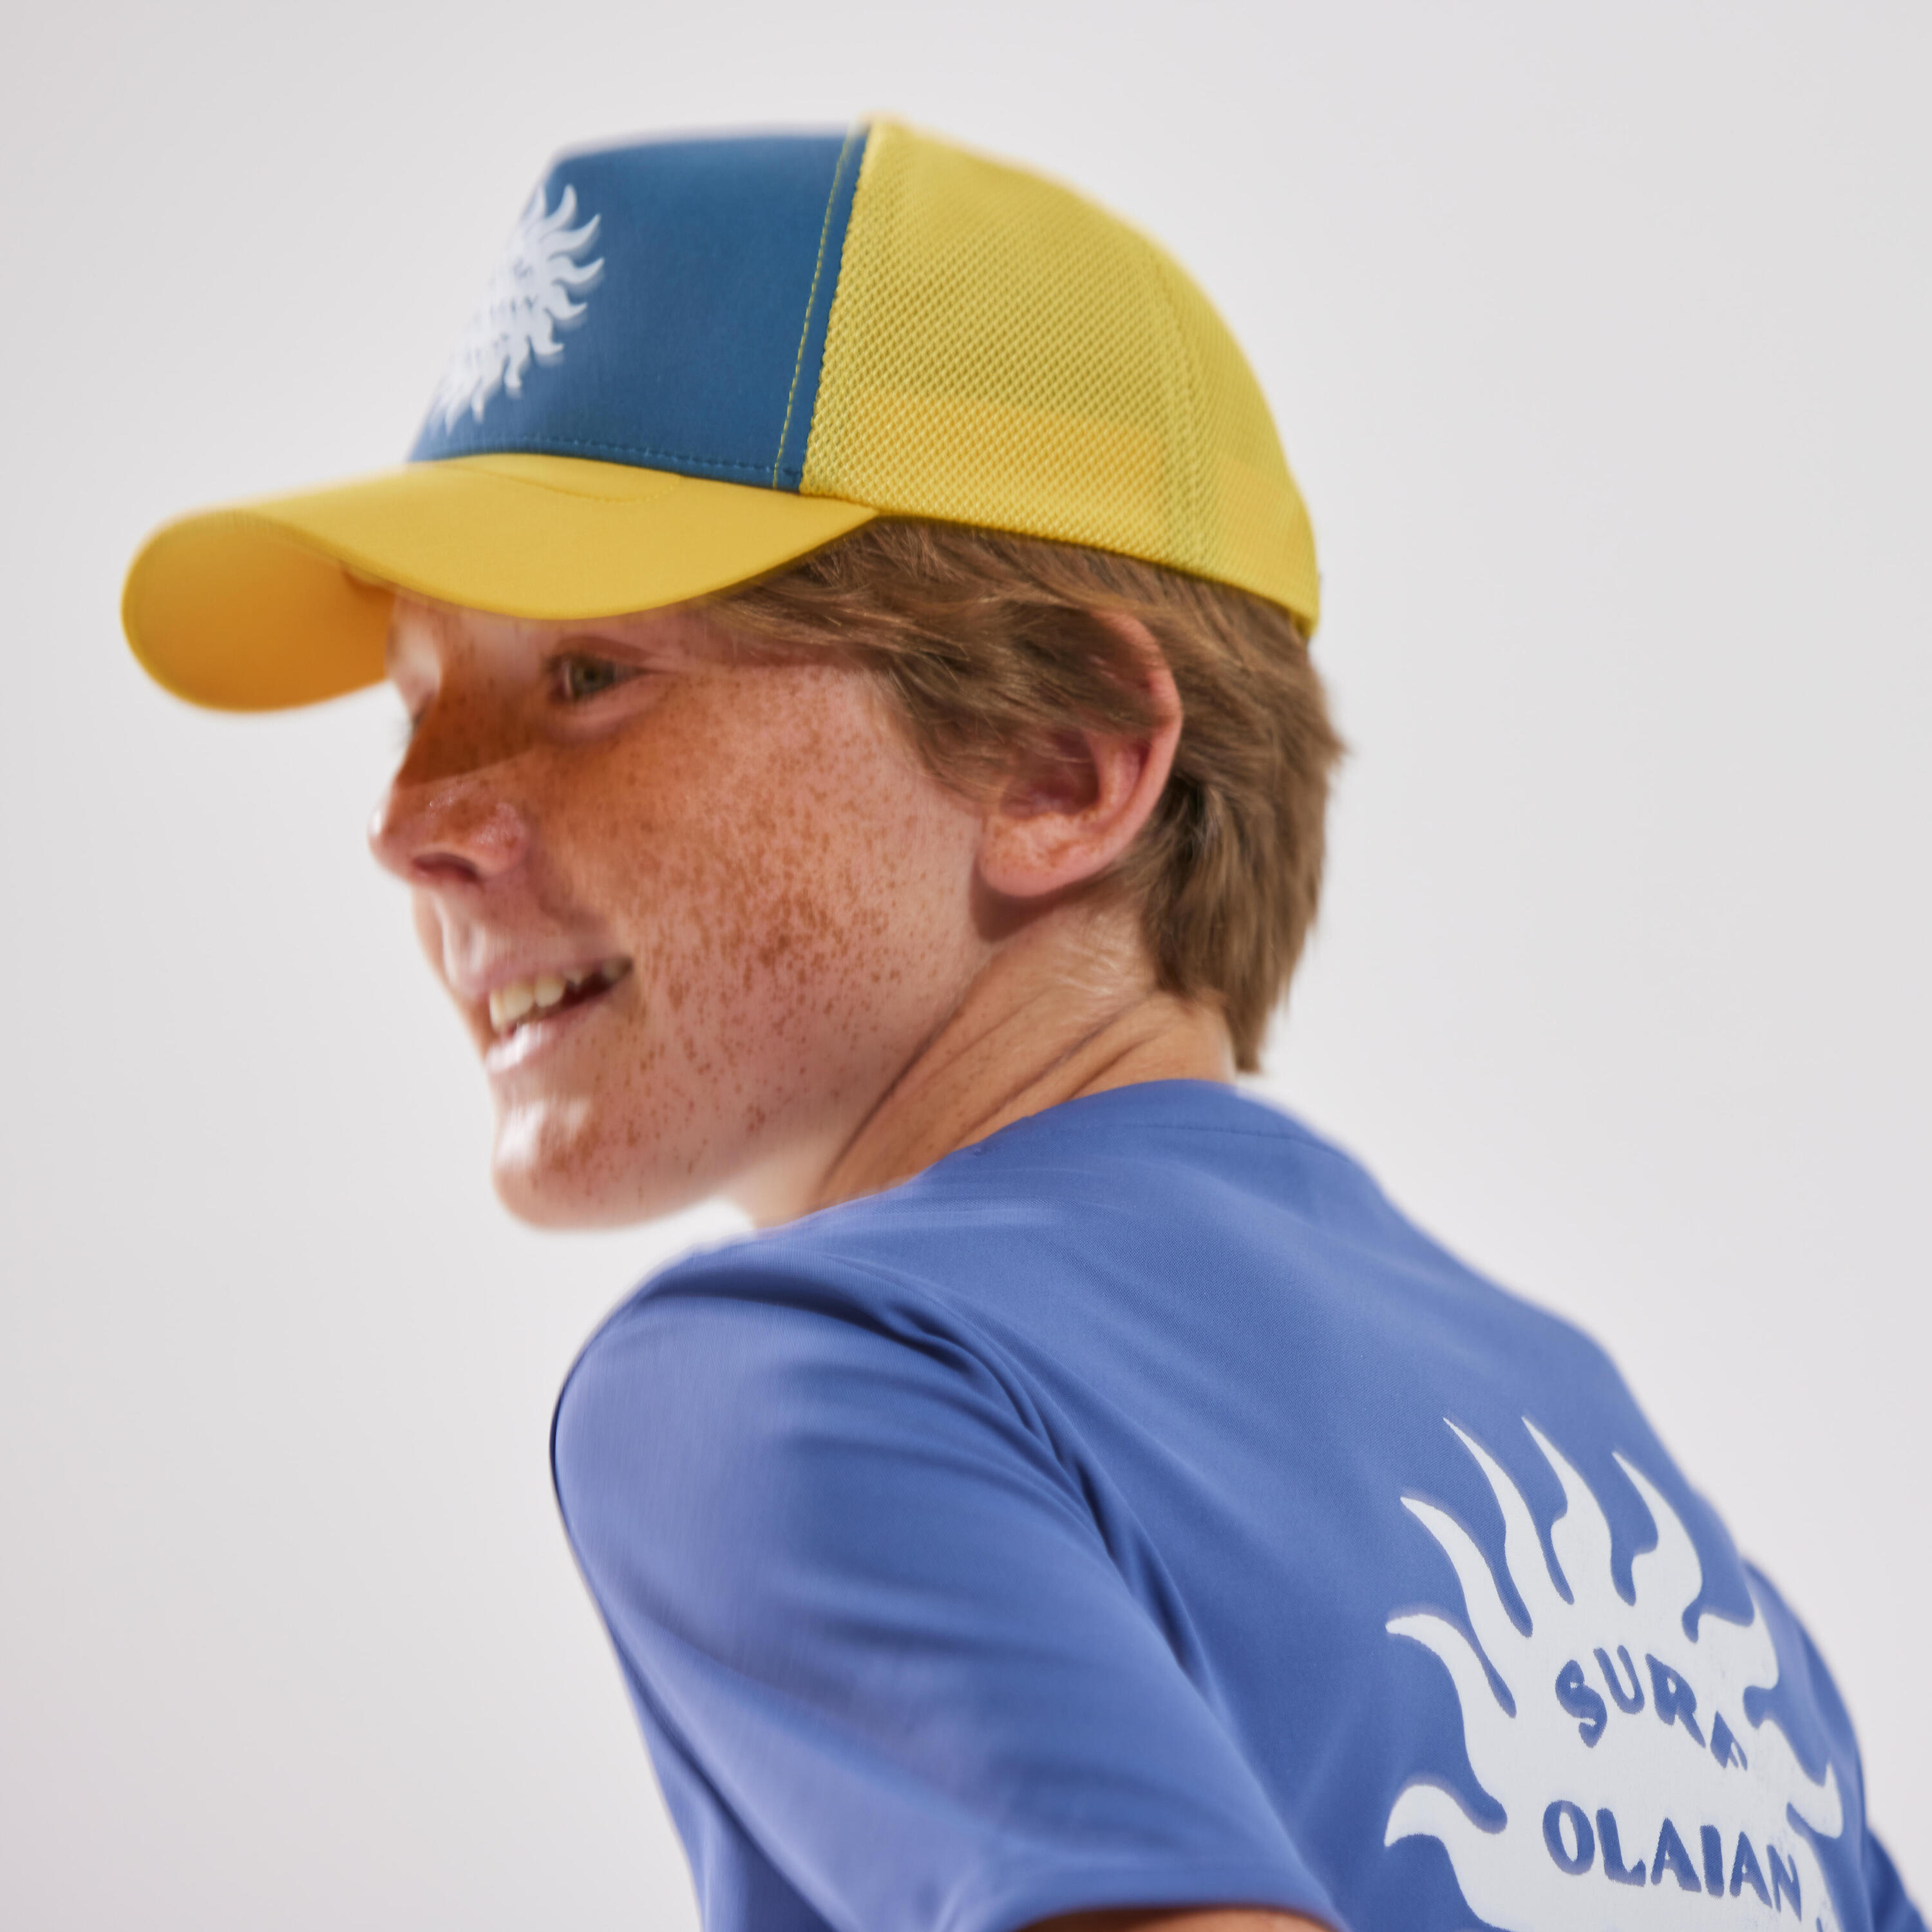 KID'S SURFING TRUCKER CAP BLUE YELLOW 10/11